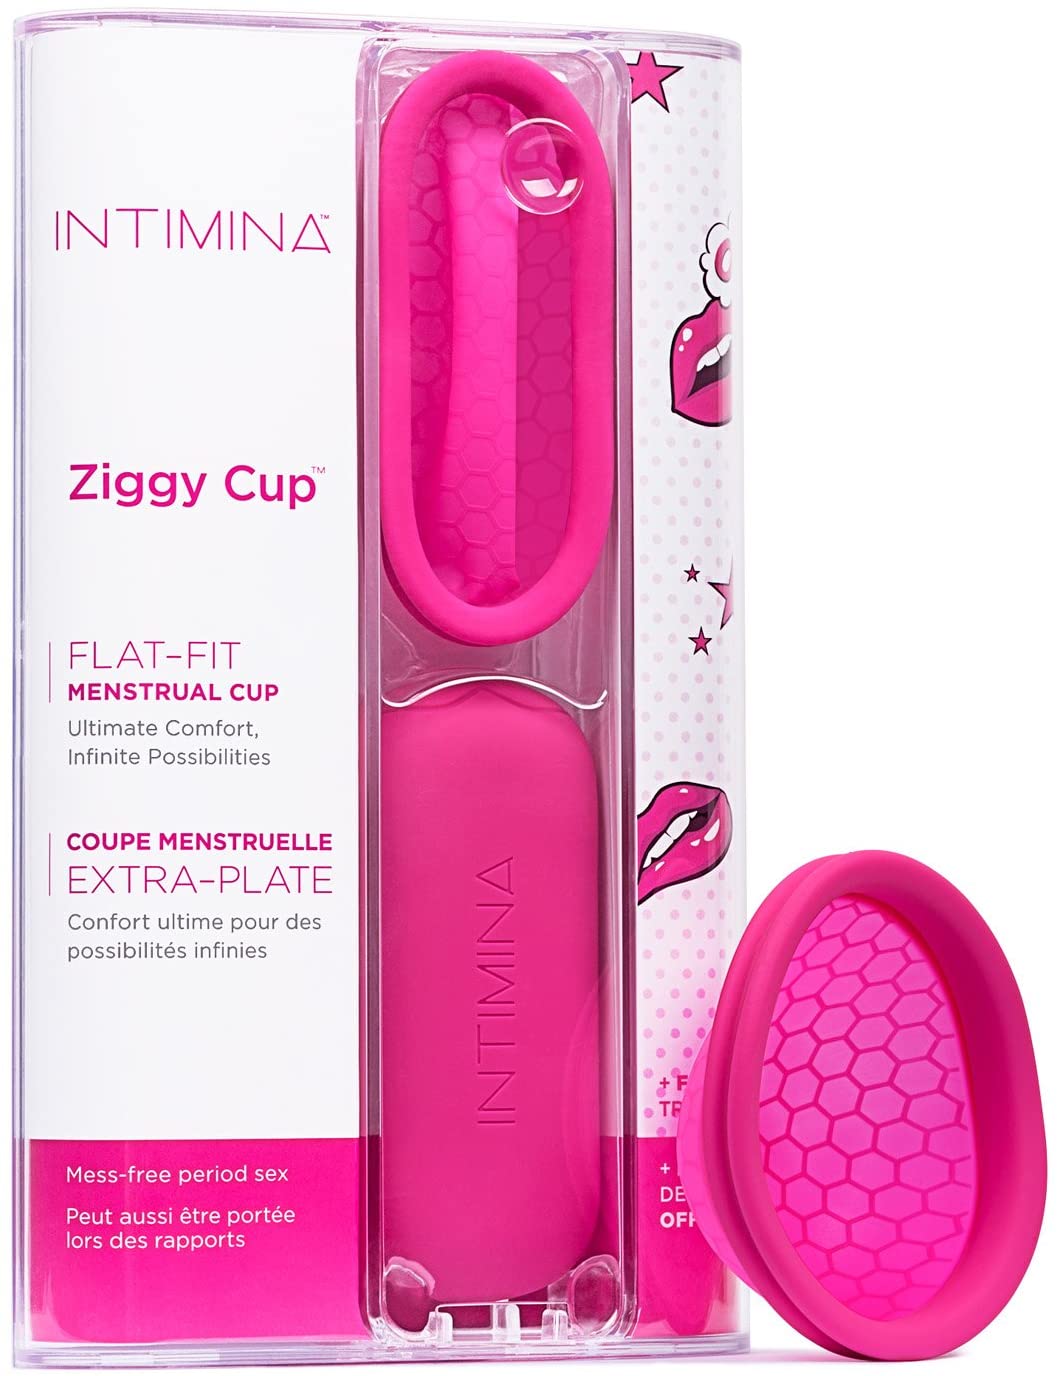 Ziggy Cup #6140 - Intimina Available at Online Family Pharmacy Qatar Doha